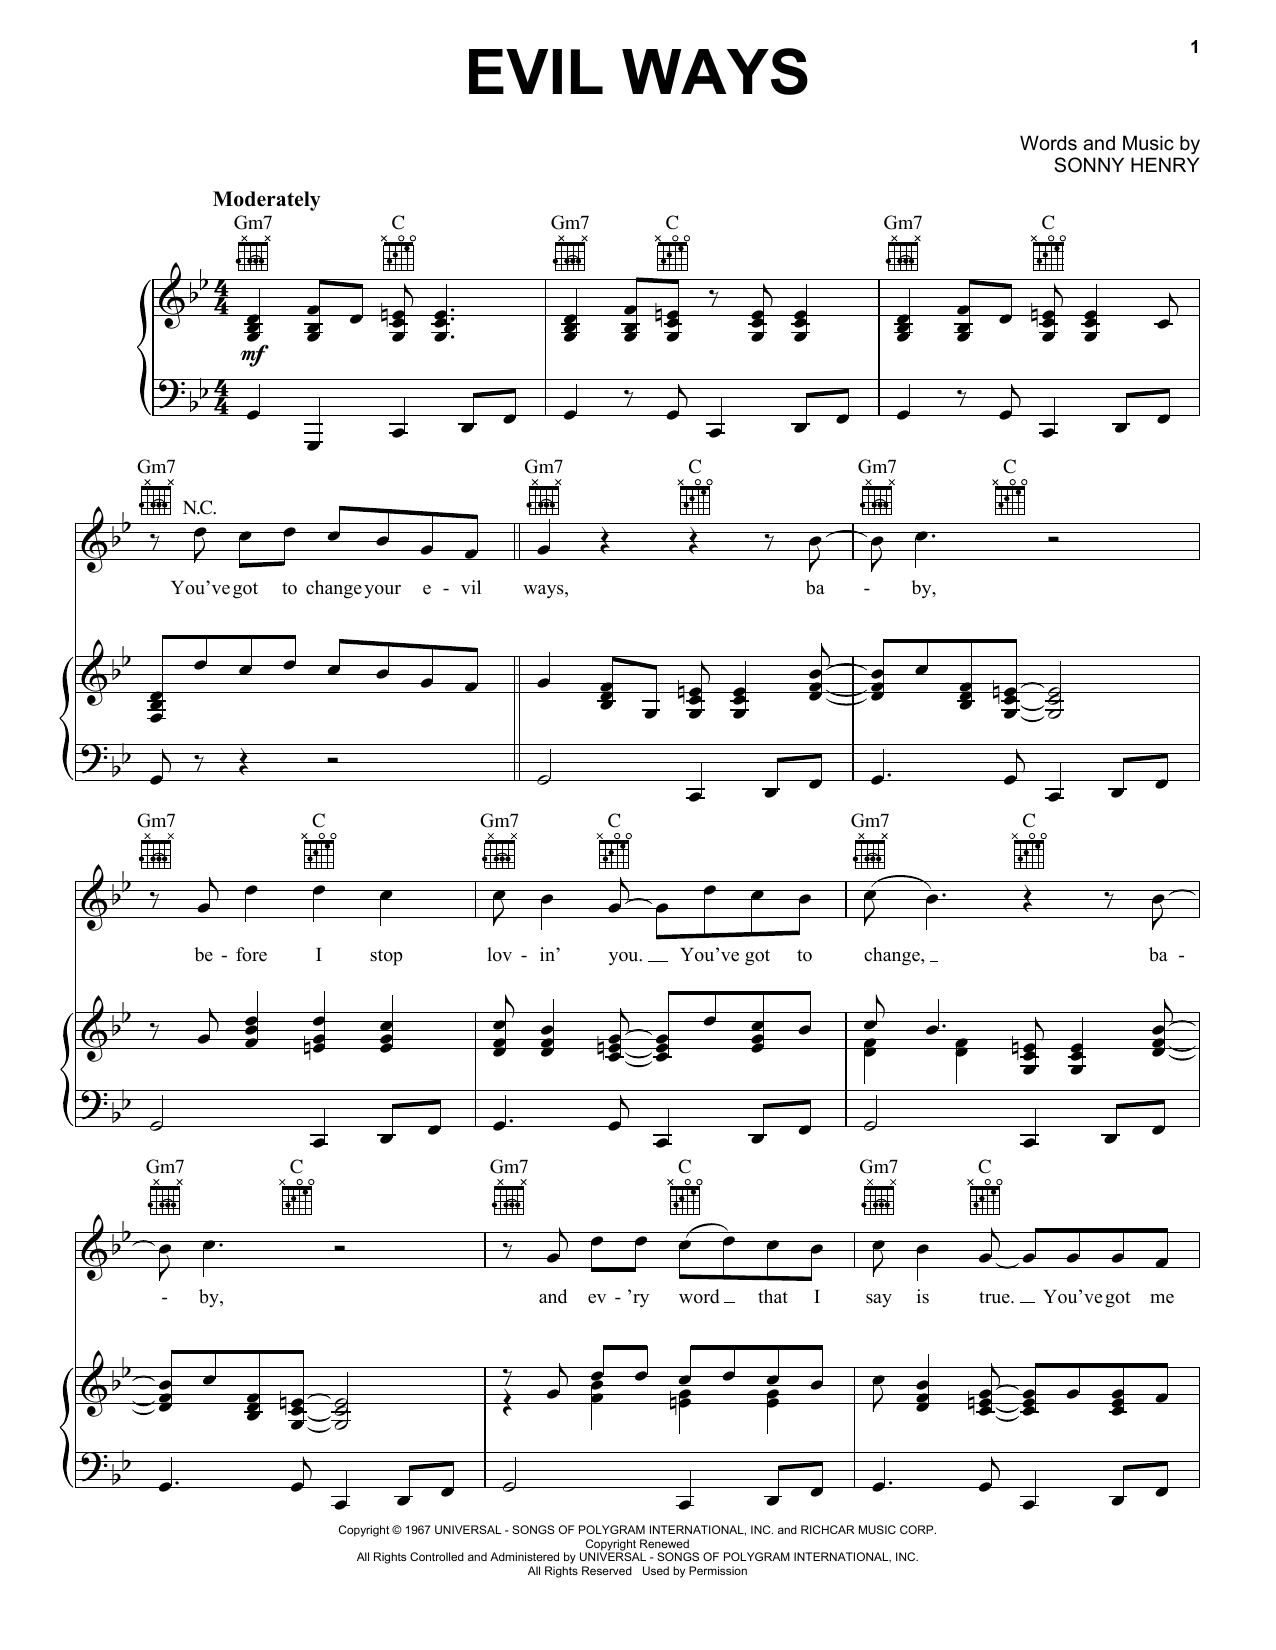 Santana Evil Ways Sheet Music Notes & Chords for Melody Line, Lyrics & Chords - Download or Print PDF